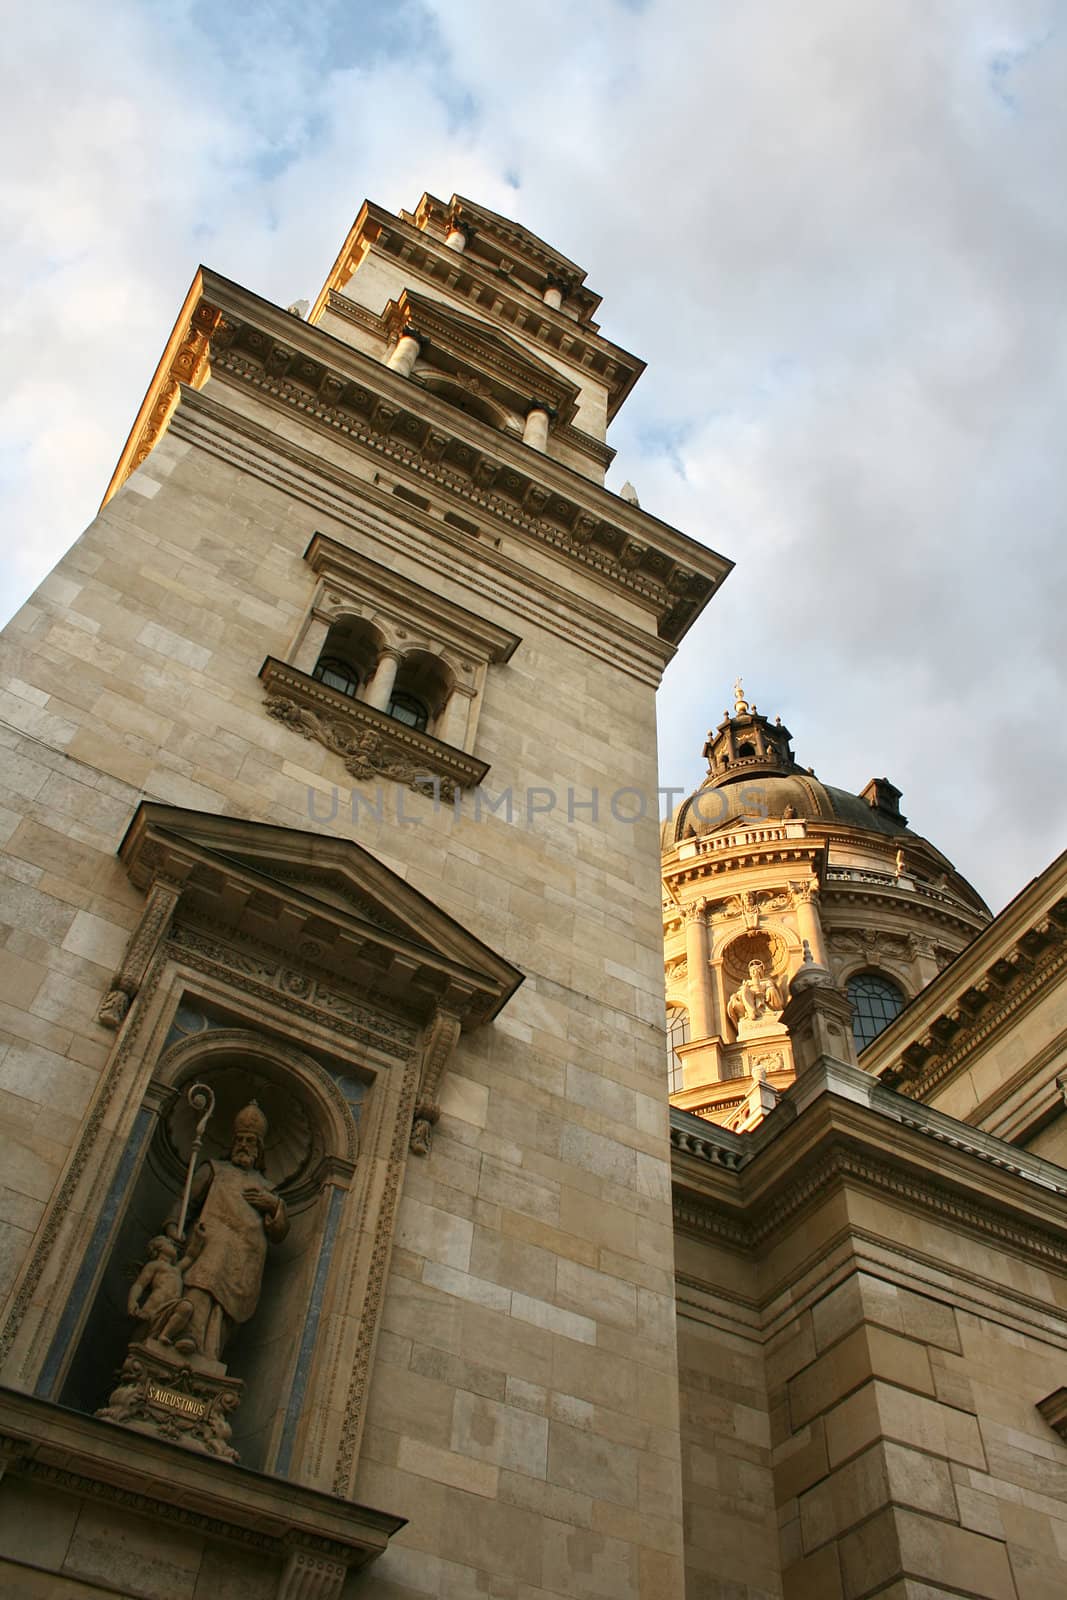 The Saint Stephen's Basilica in Budapest, Hungary